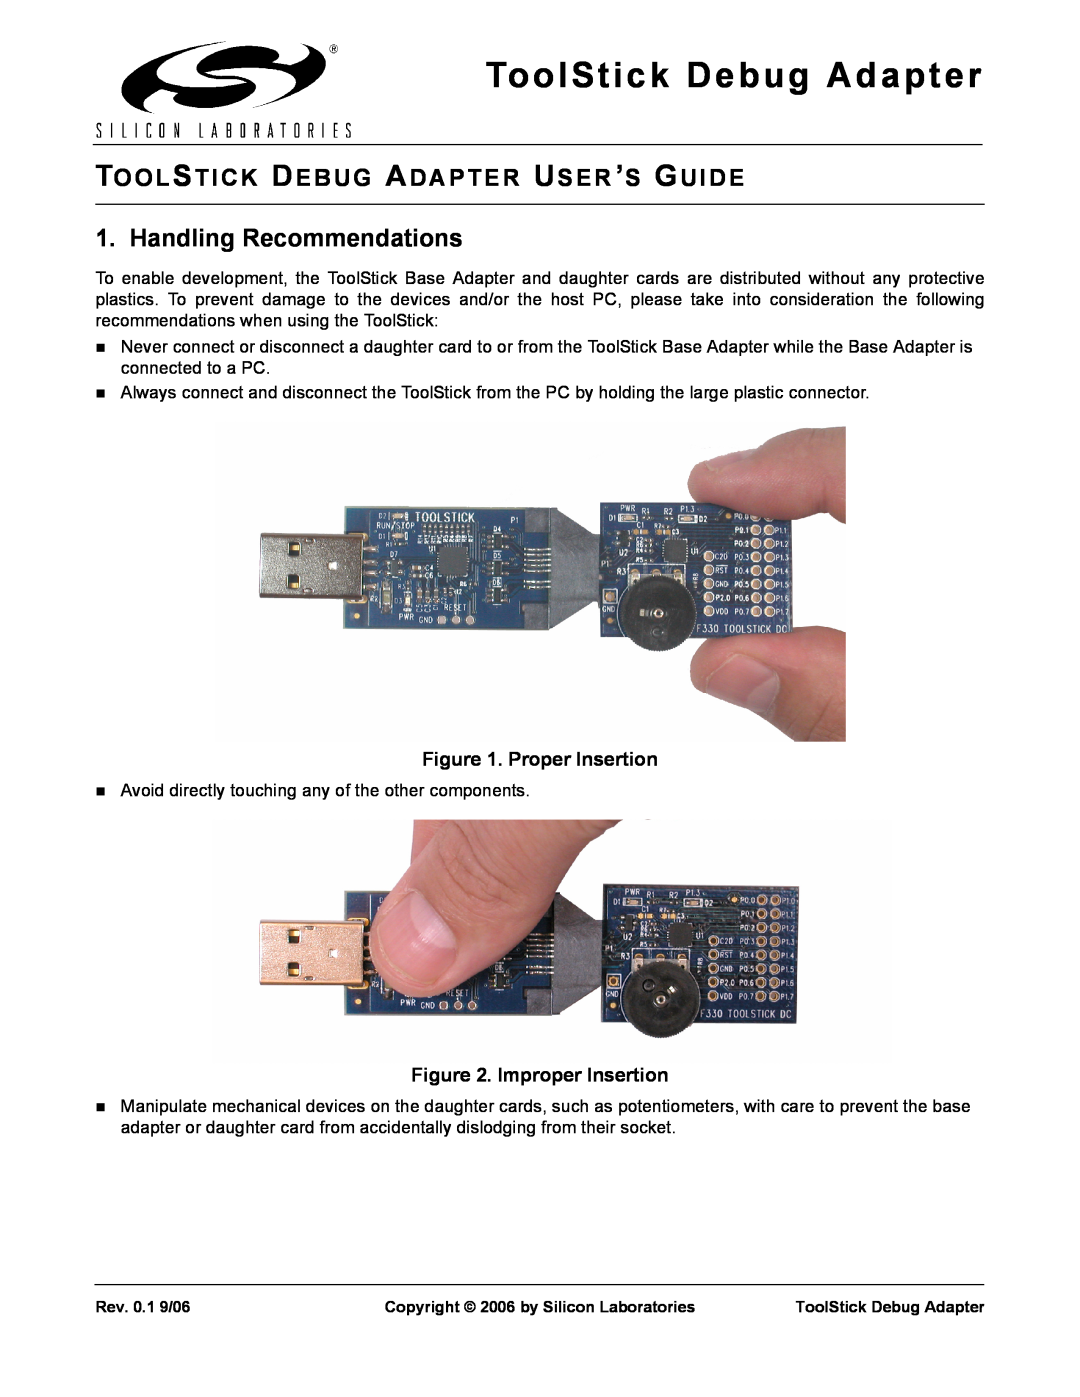 Silicon Laboratories Debug Adapter manual Handling Recommendations, Proper Insertion, Improper Insertion 